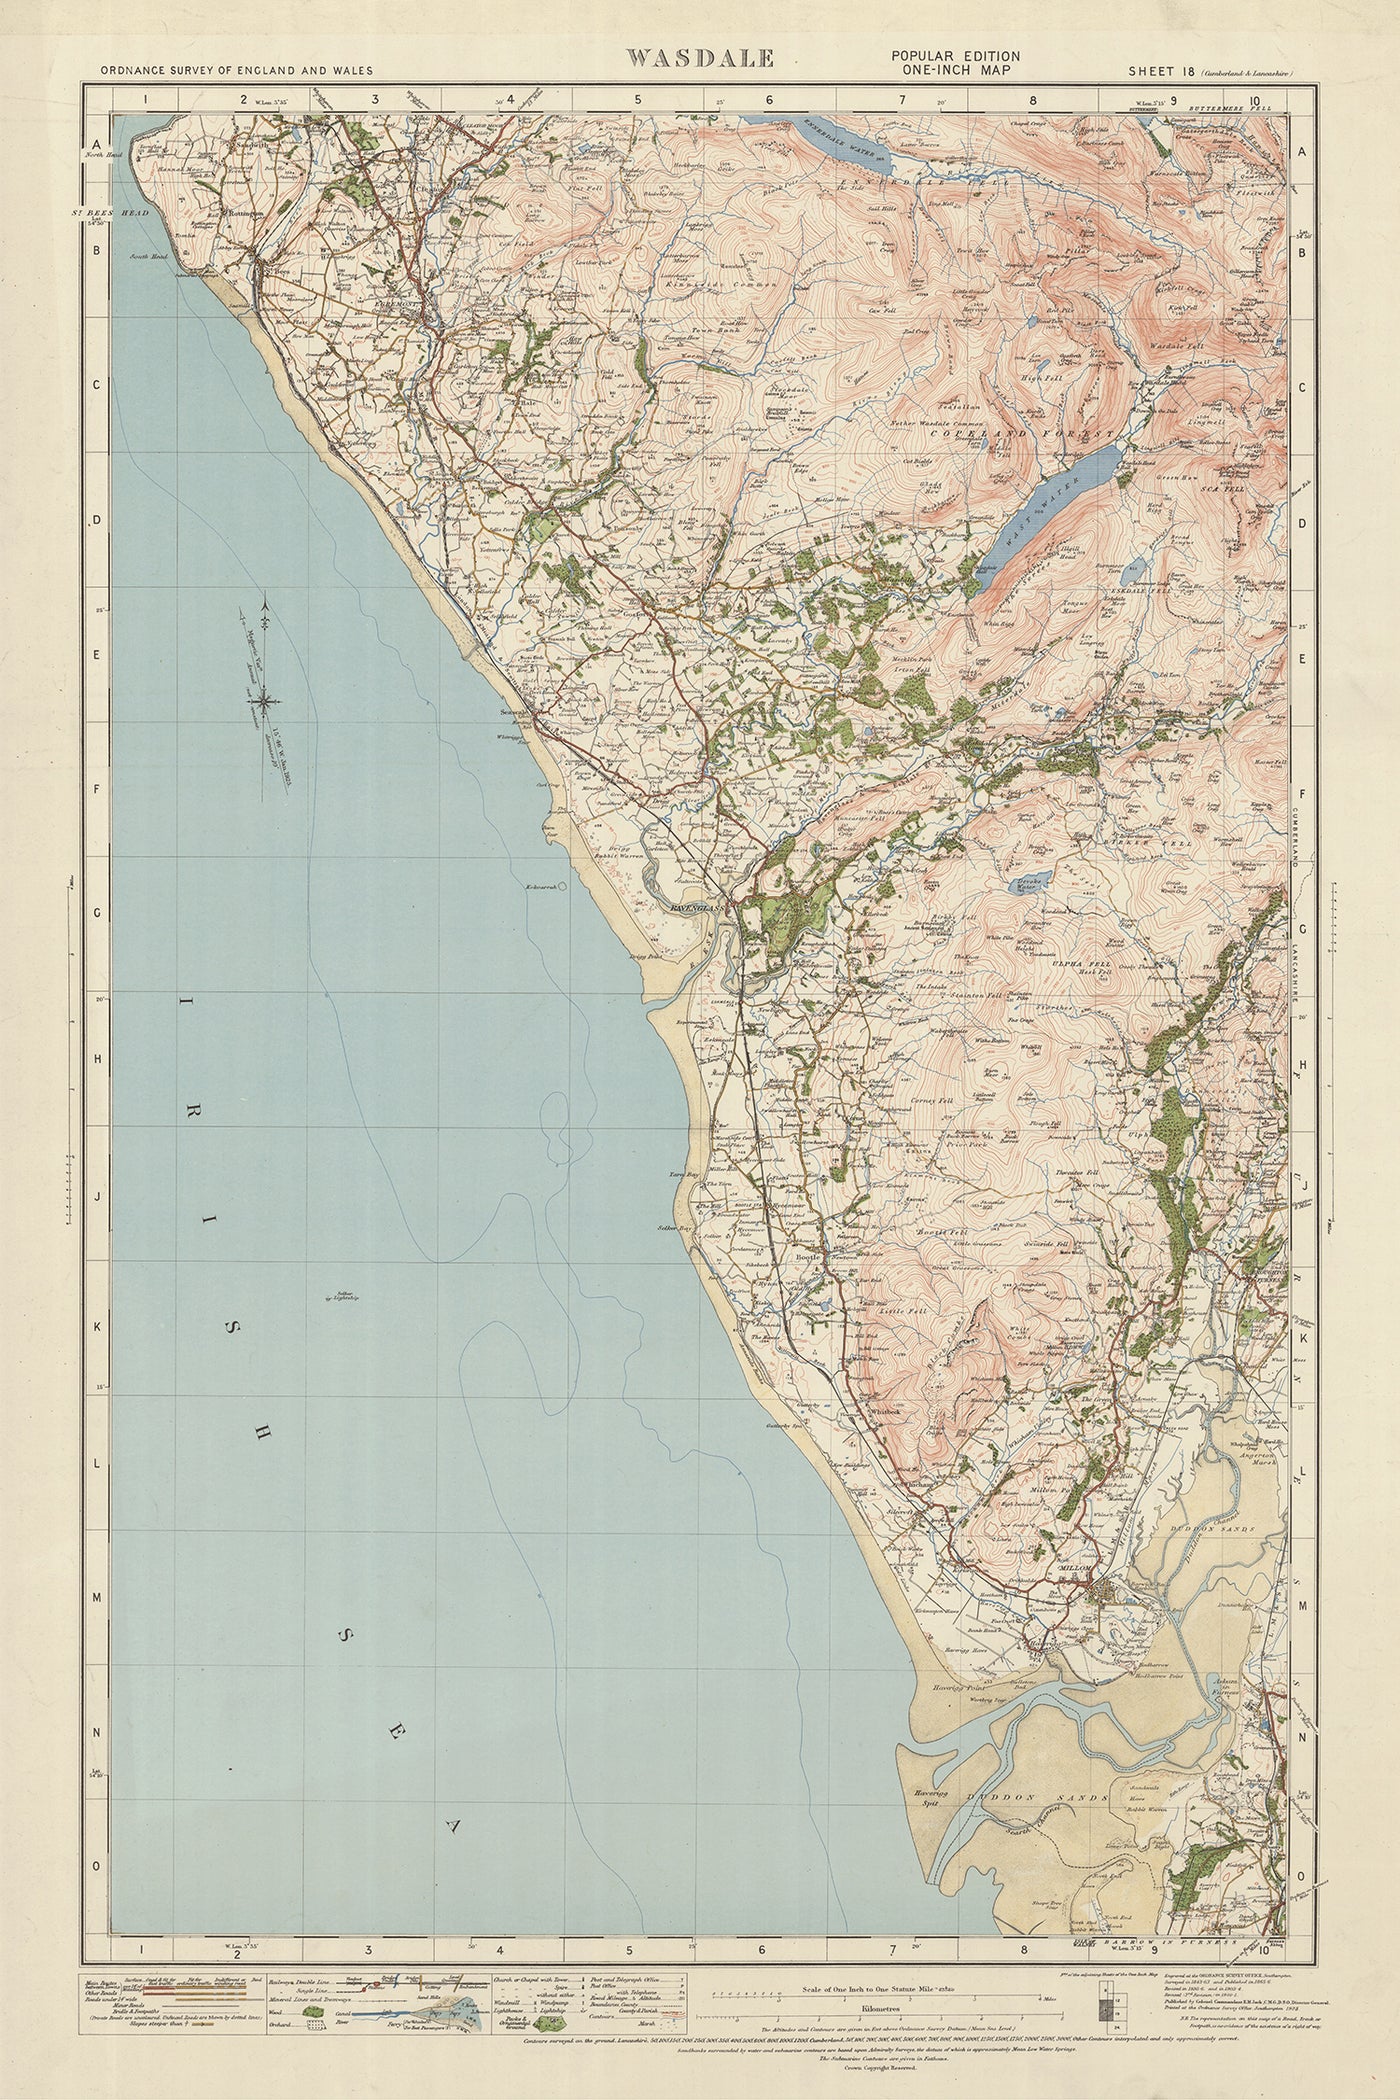 Old Ordnance Survey Map, Sheet 18 - Wasdale, 1925: Egremont, Ravenglass, Millom, Scafell Pike, Lake District National Park